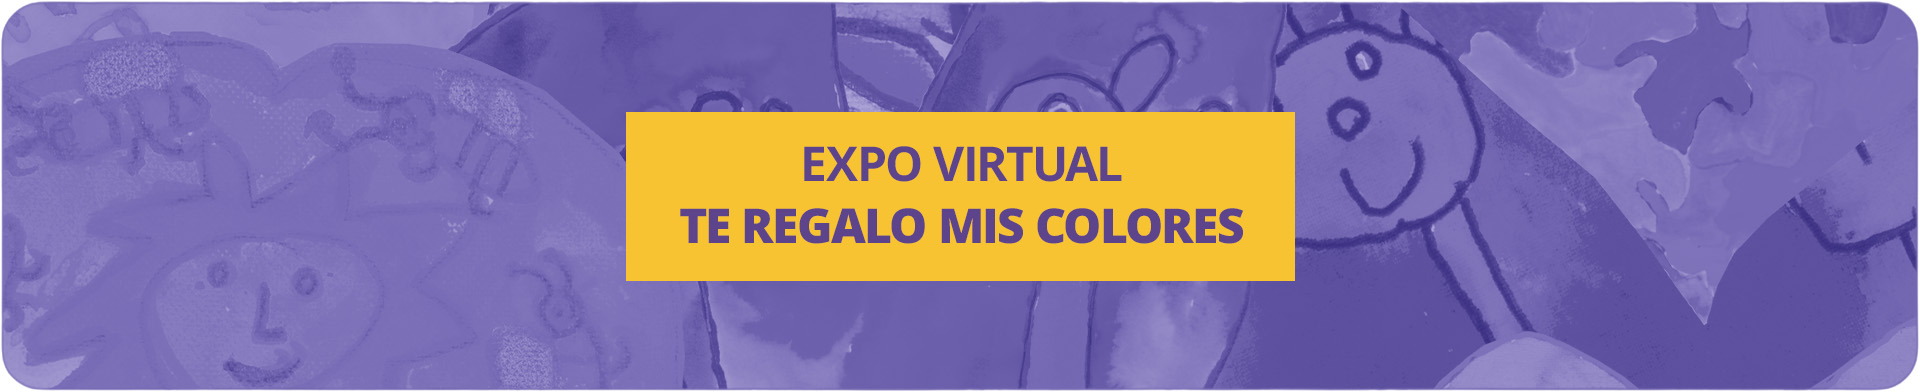 Expo Virtual: Te regalo mis colores